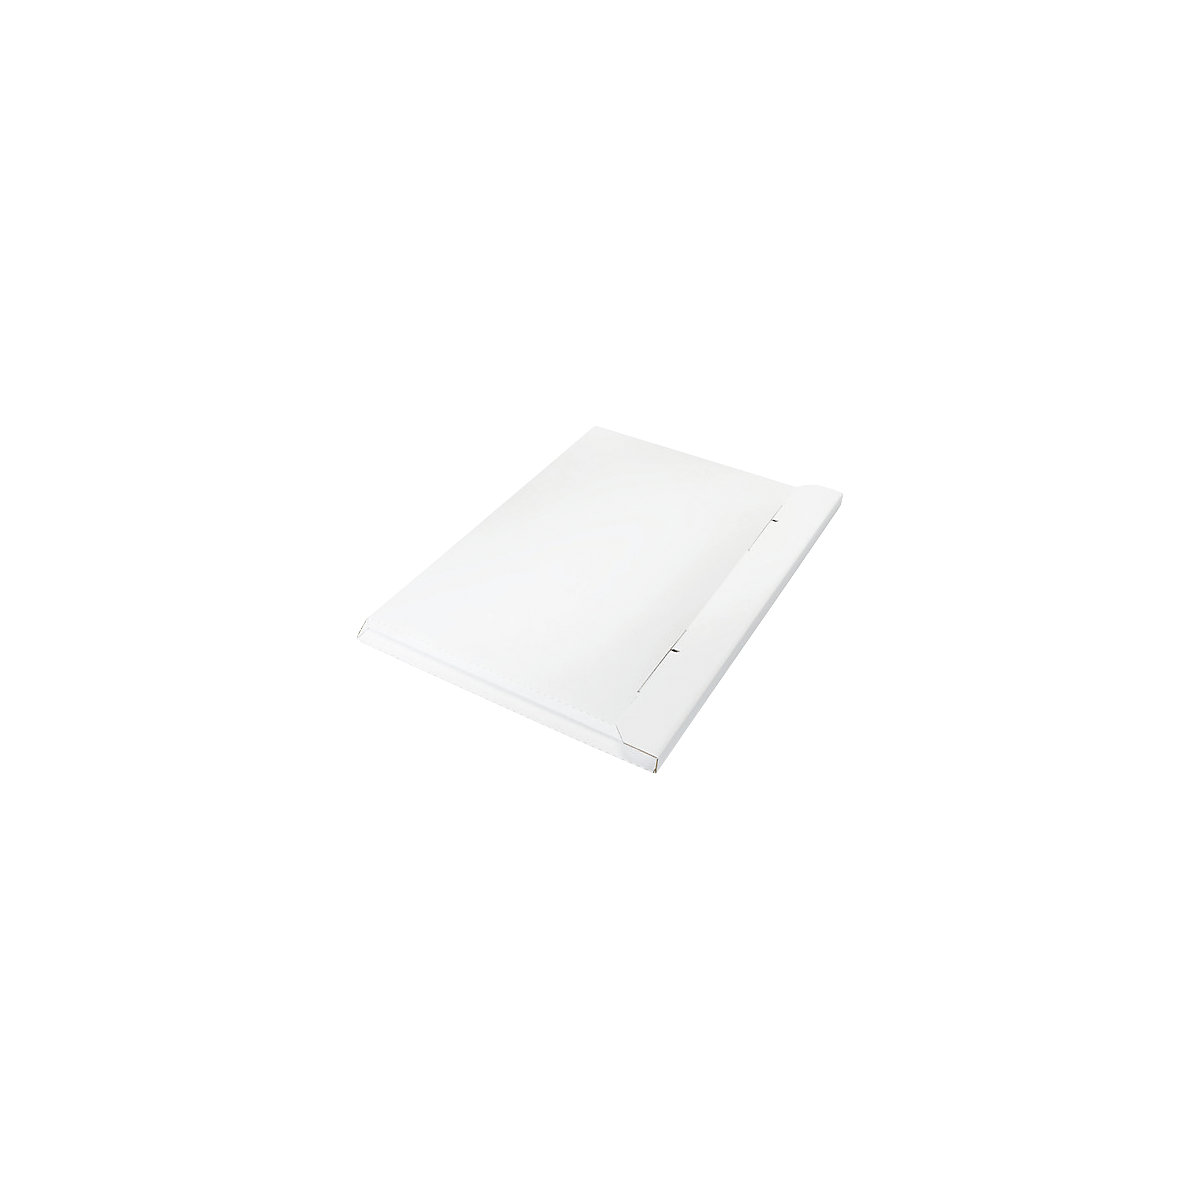 Flach-/Kalender-Pack, 1-wellig, Innen-LxBxH 570 x 395 x 10 mm, weiß, ab 200 Stk-3